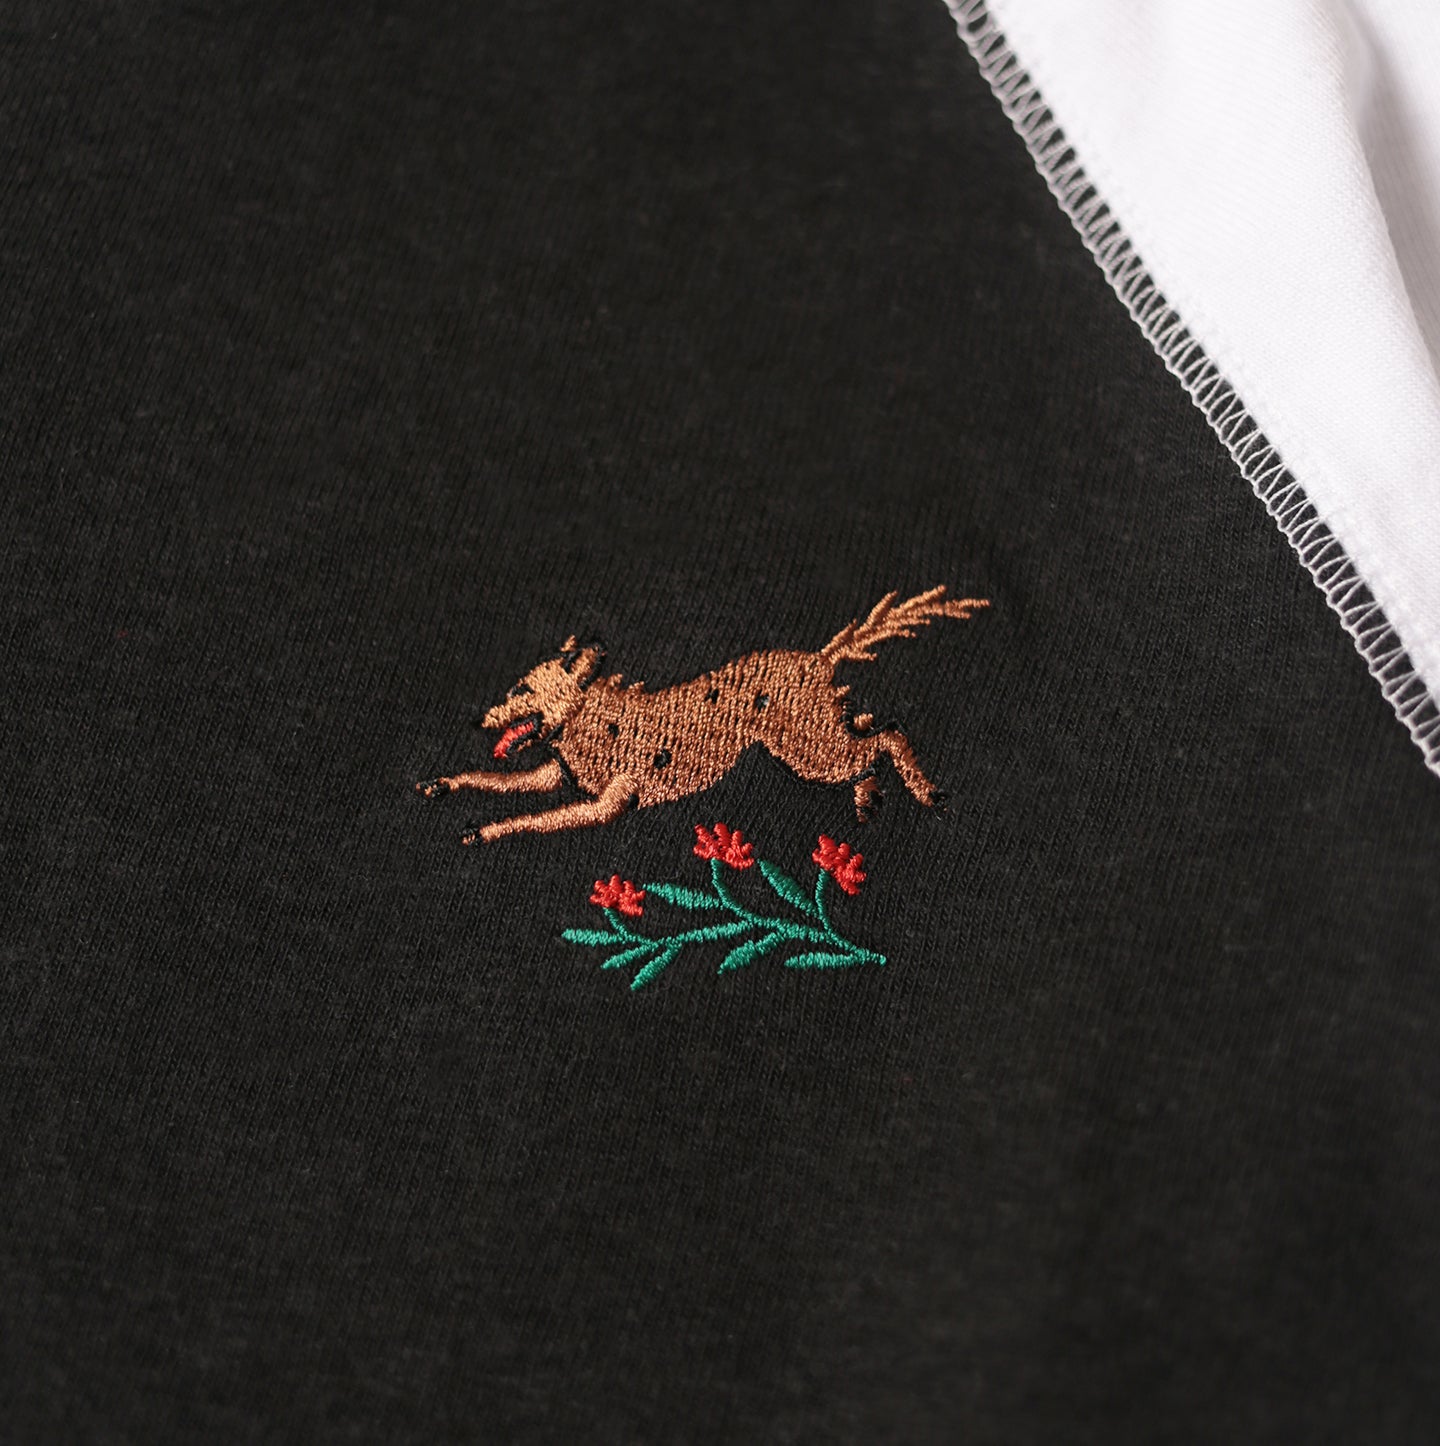 Baseball Tee - Black/White - Wild Wolf Embroidery